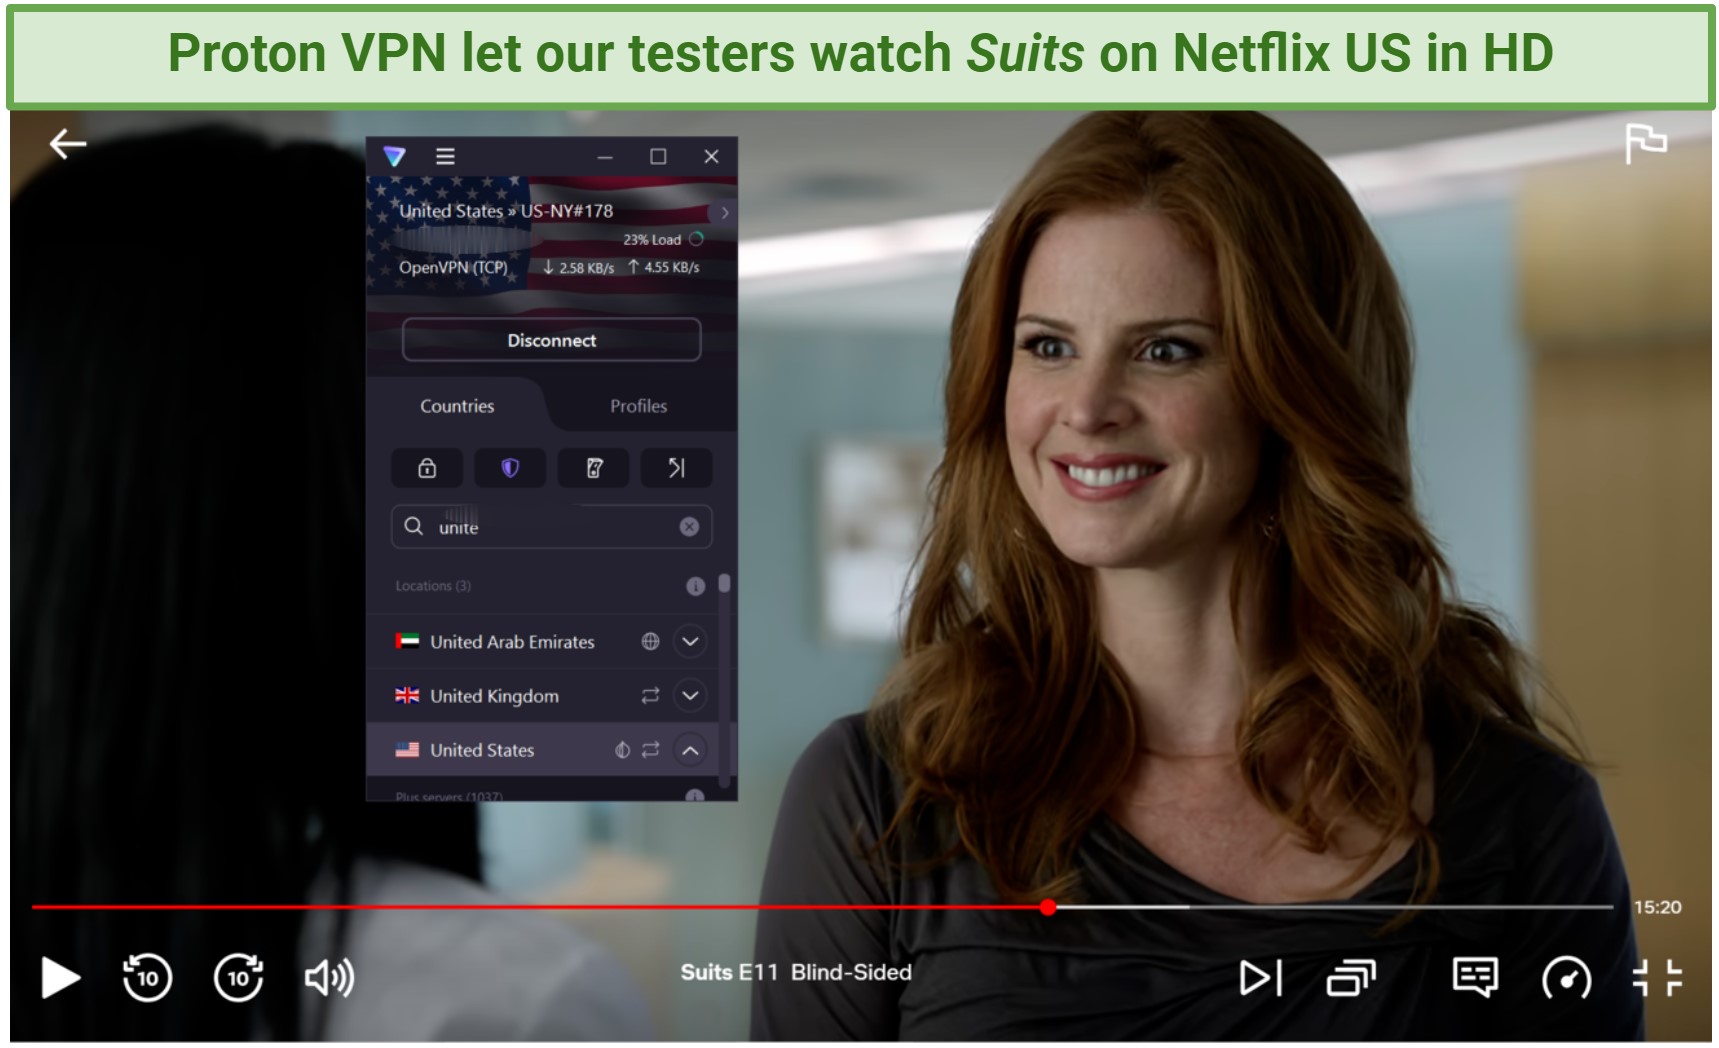 Screenshot of Proton VPN streaming Suits on US Netflix